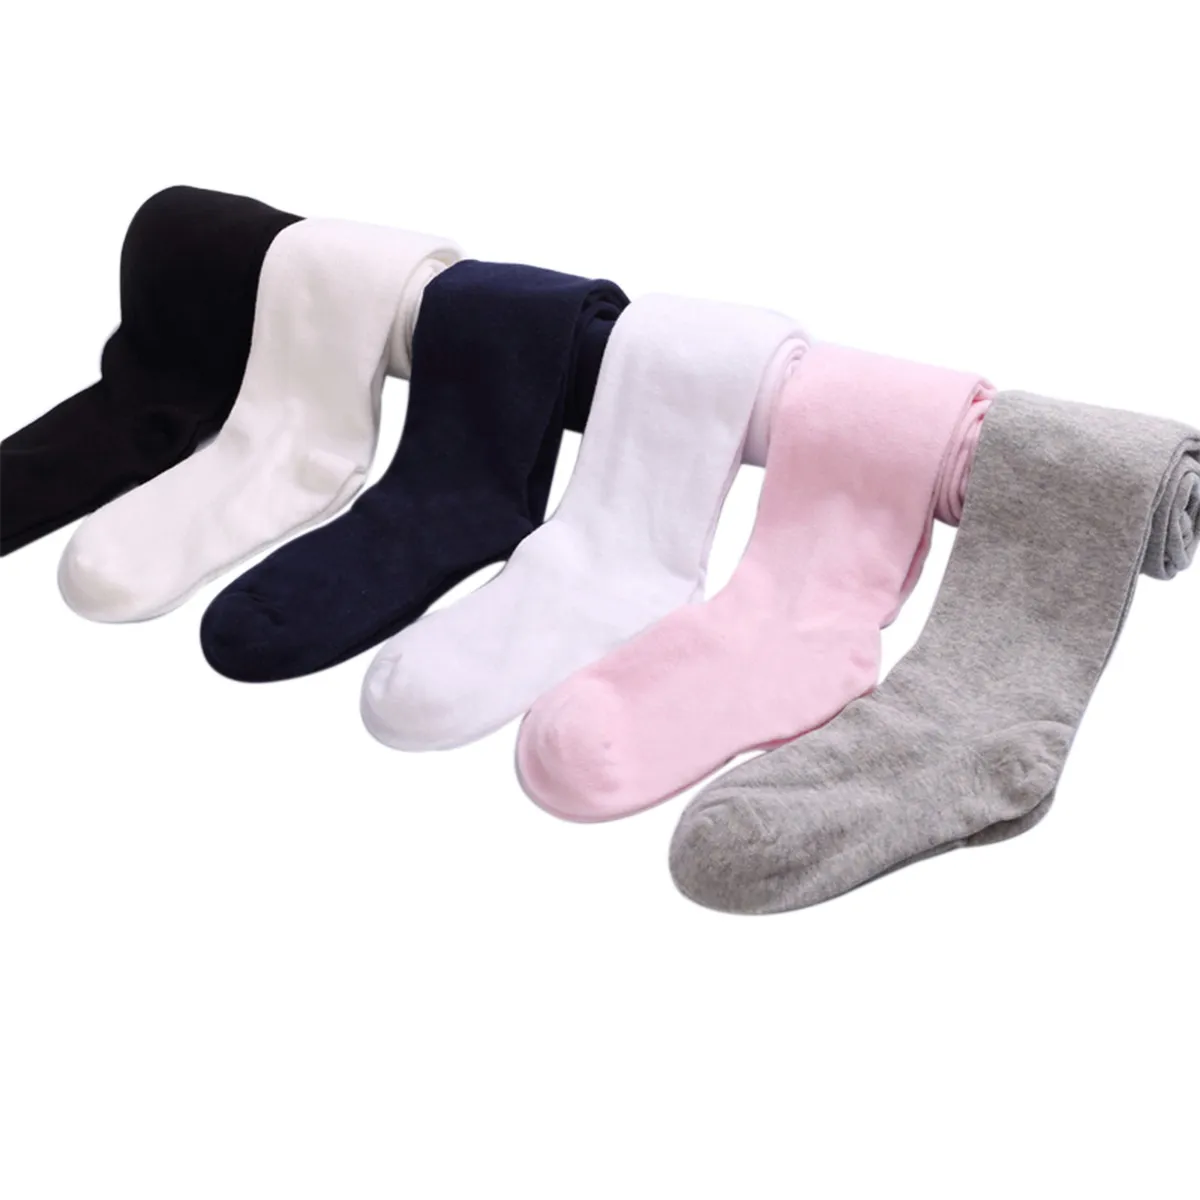 Kids Girls Panty-Hose Solid Color High Waist Pantihose Leggings for Toddler Girls( White/Beige/Pink/Gray/Black)